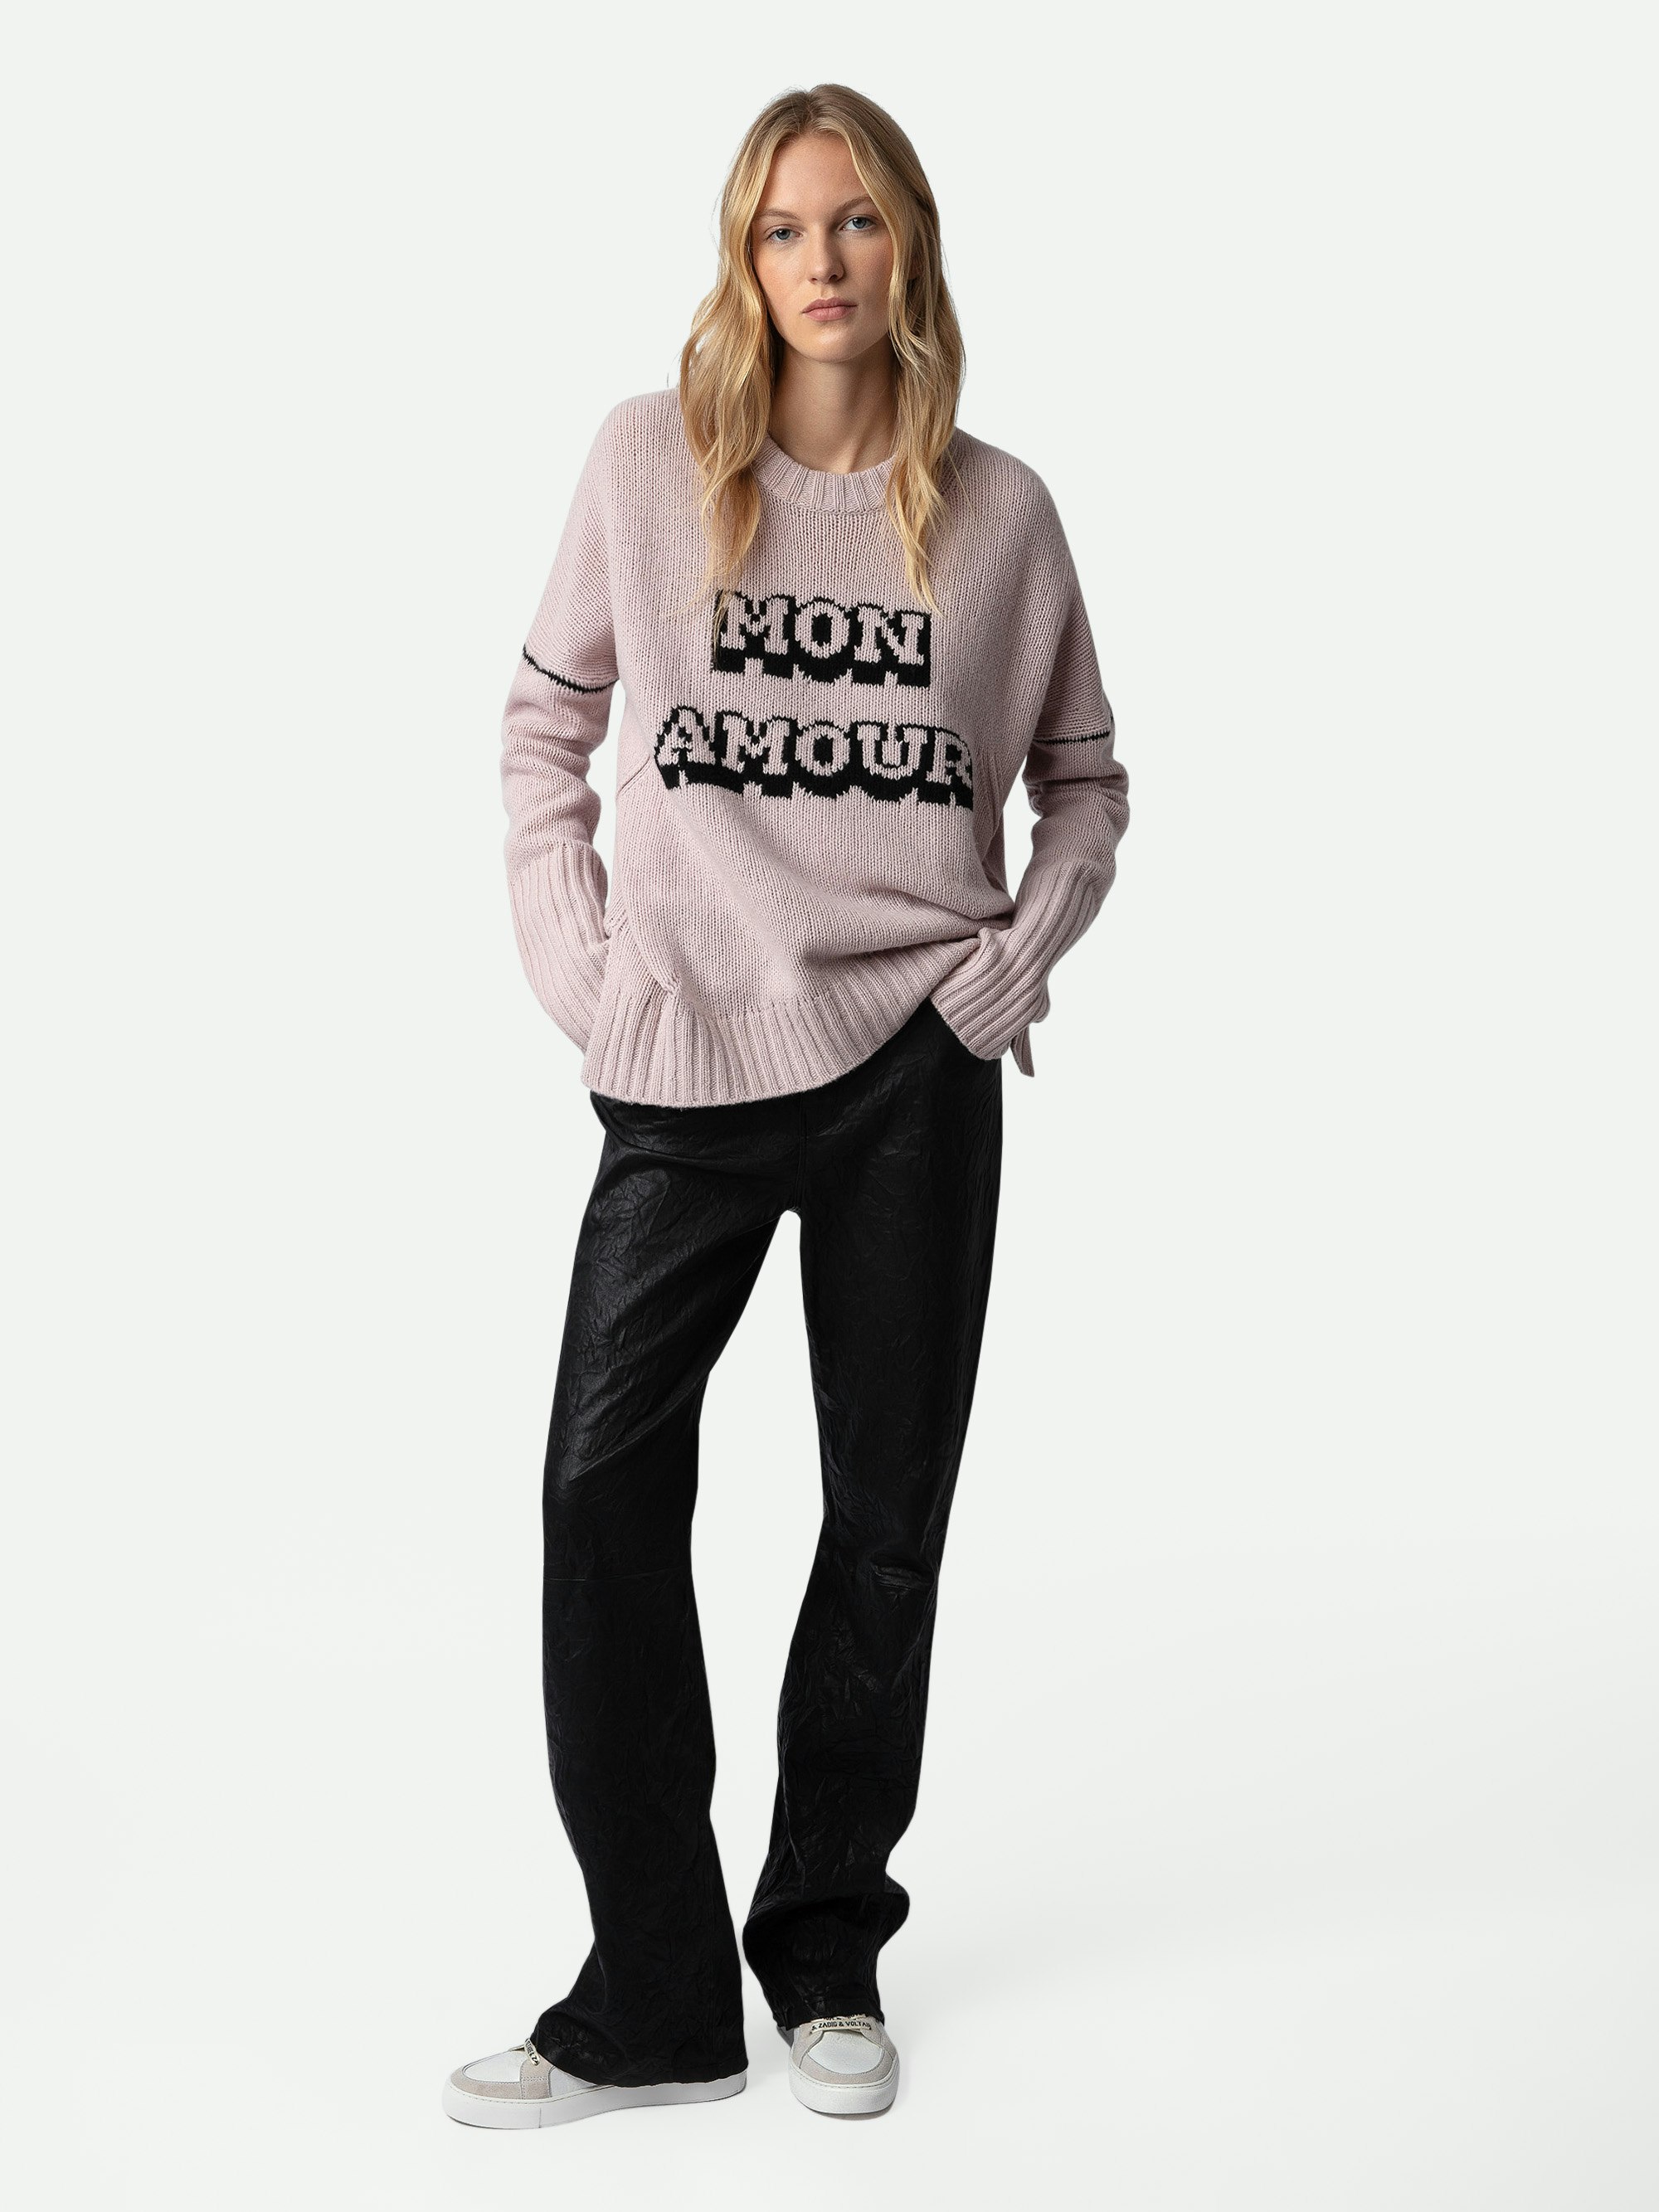 Malta Mon Amour Sweater - Women’s pink merino wool sweater with intarsia jacquard “Mon Amour” slogan.